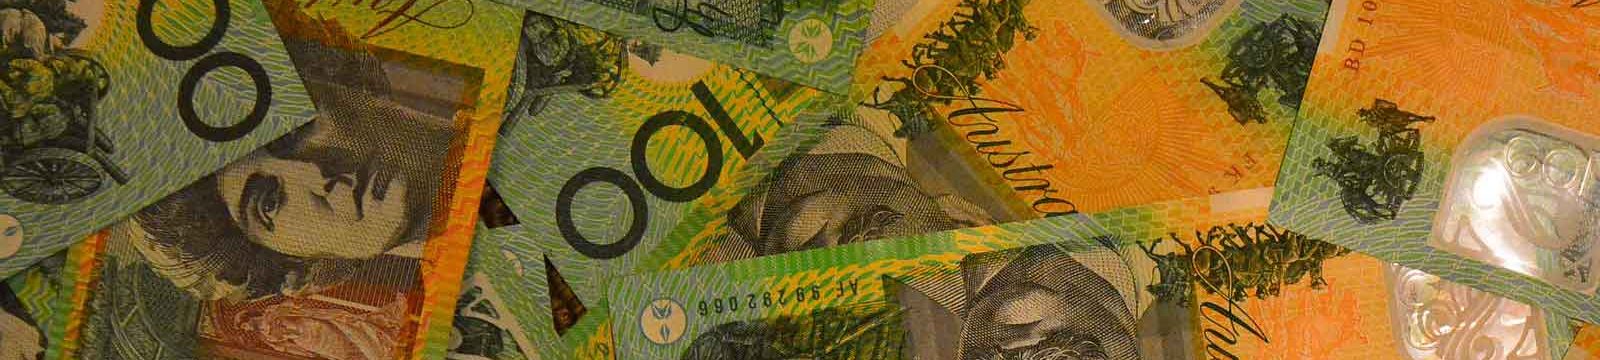 Australian 100 dollar bills